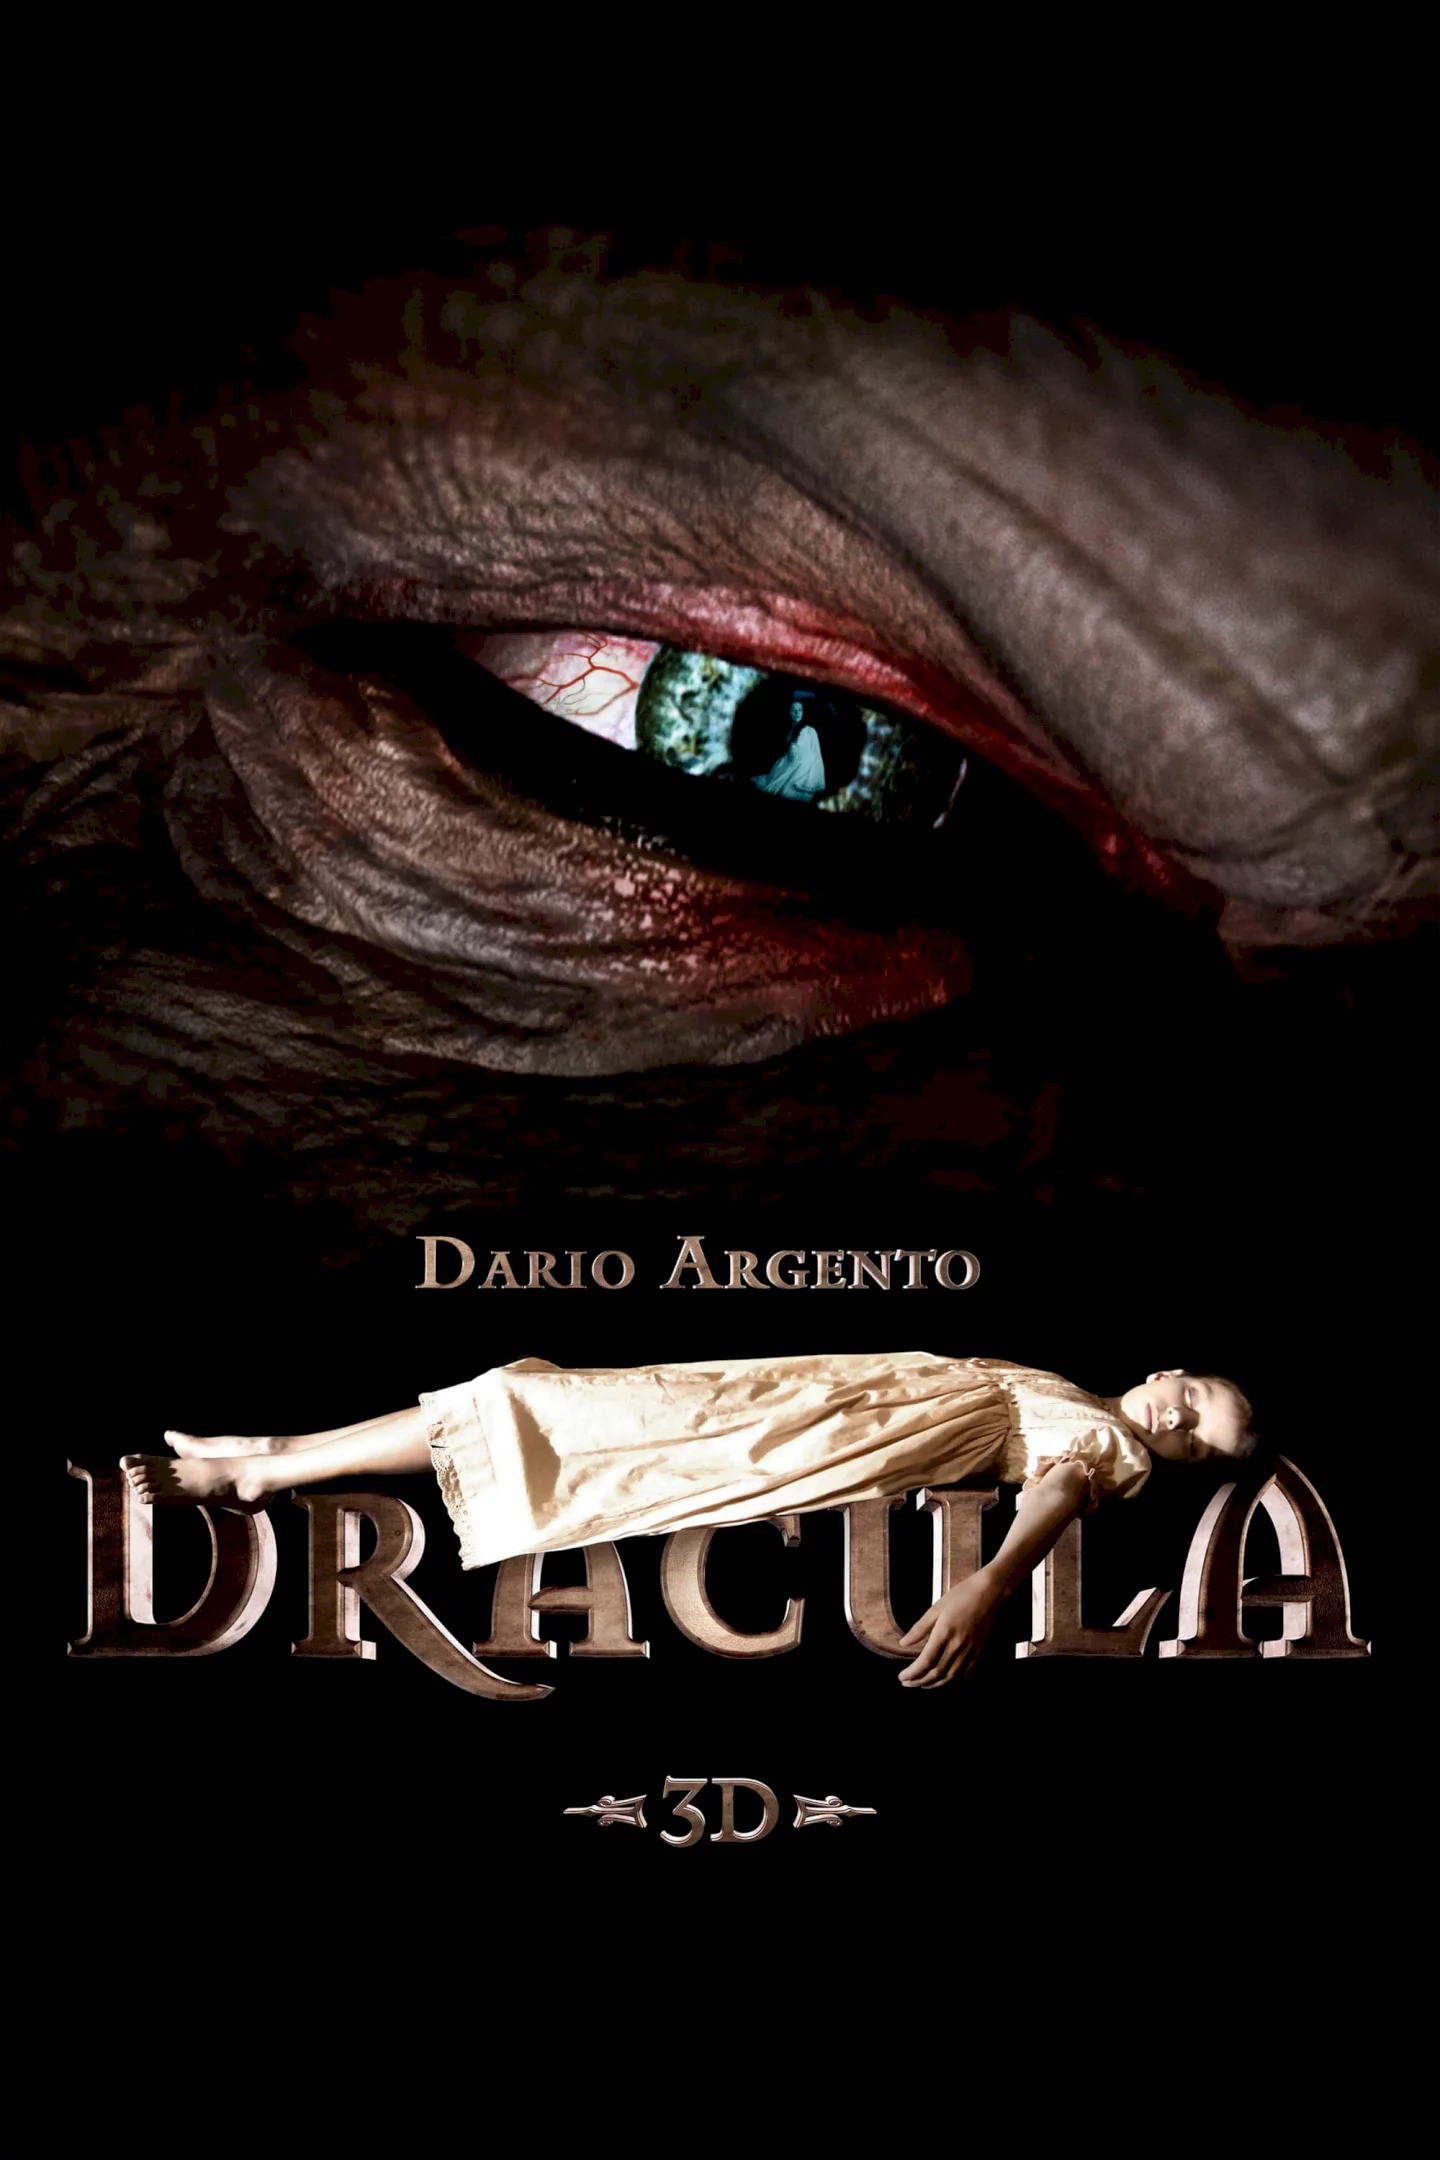 Photo 3 du film : Dario Argento's Dracula